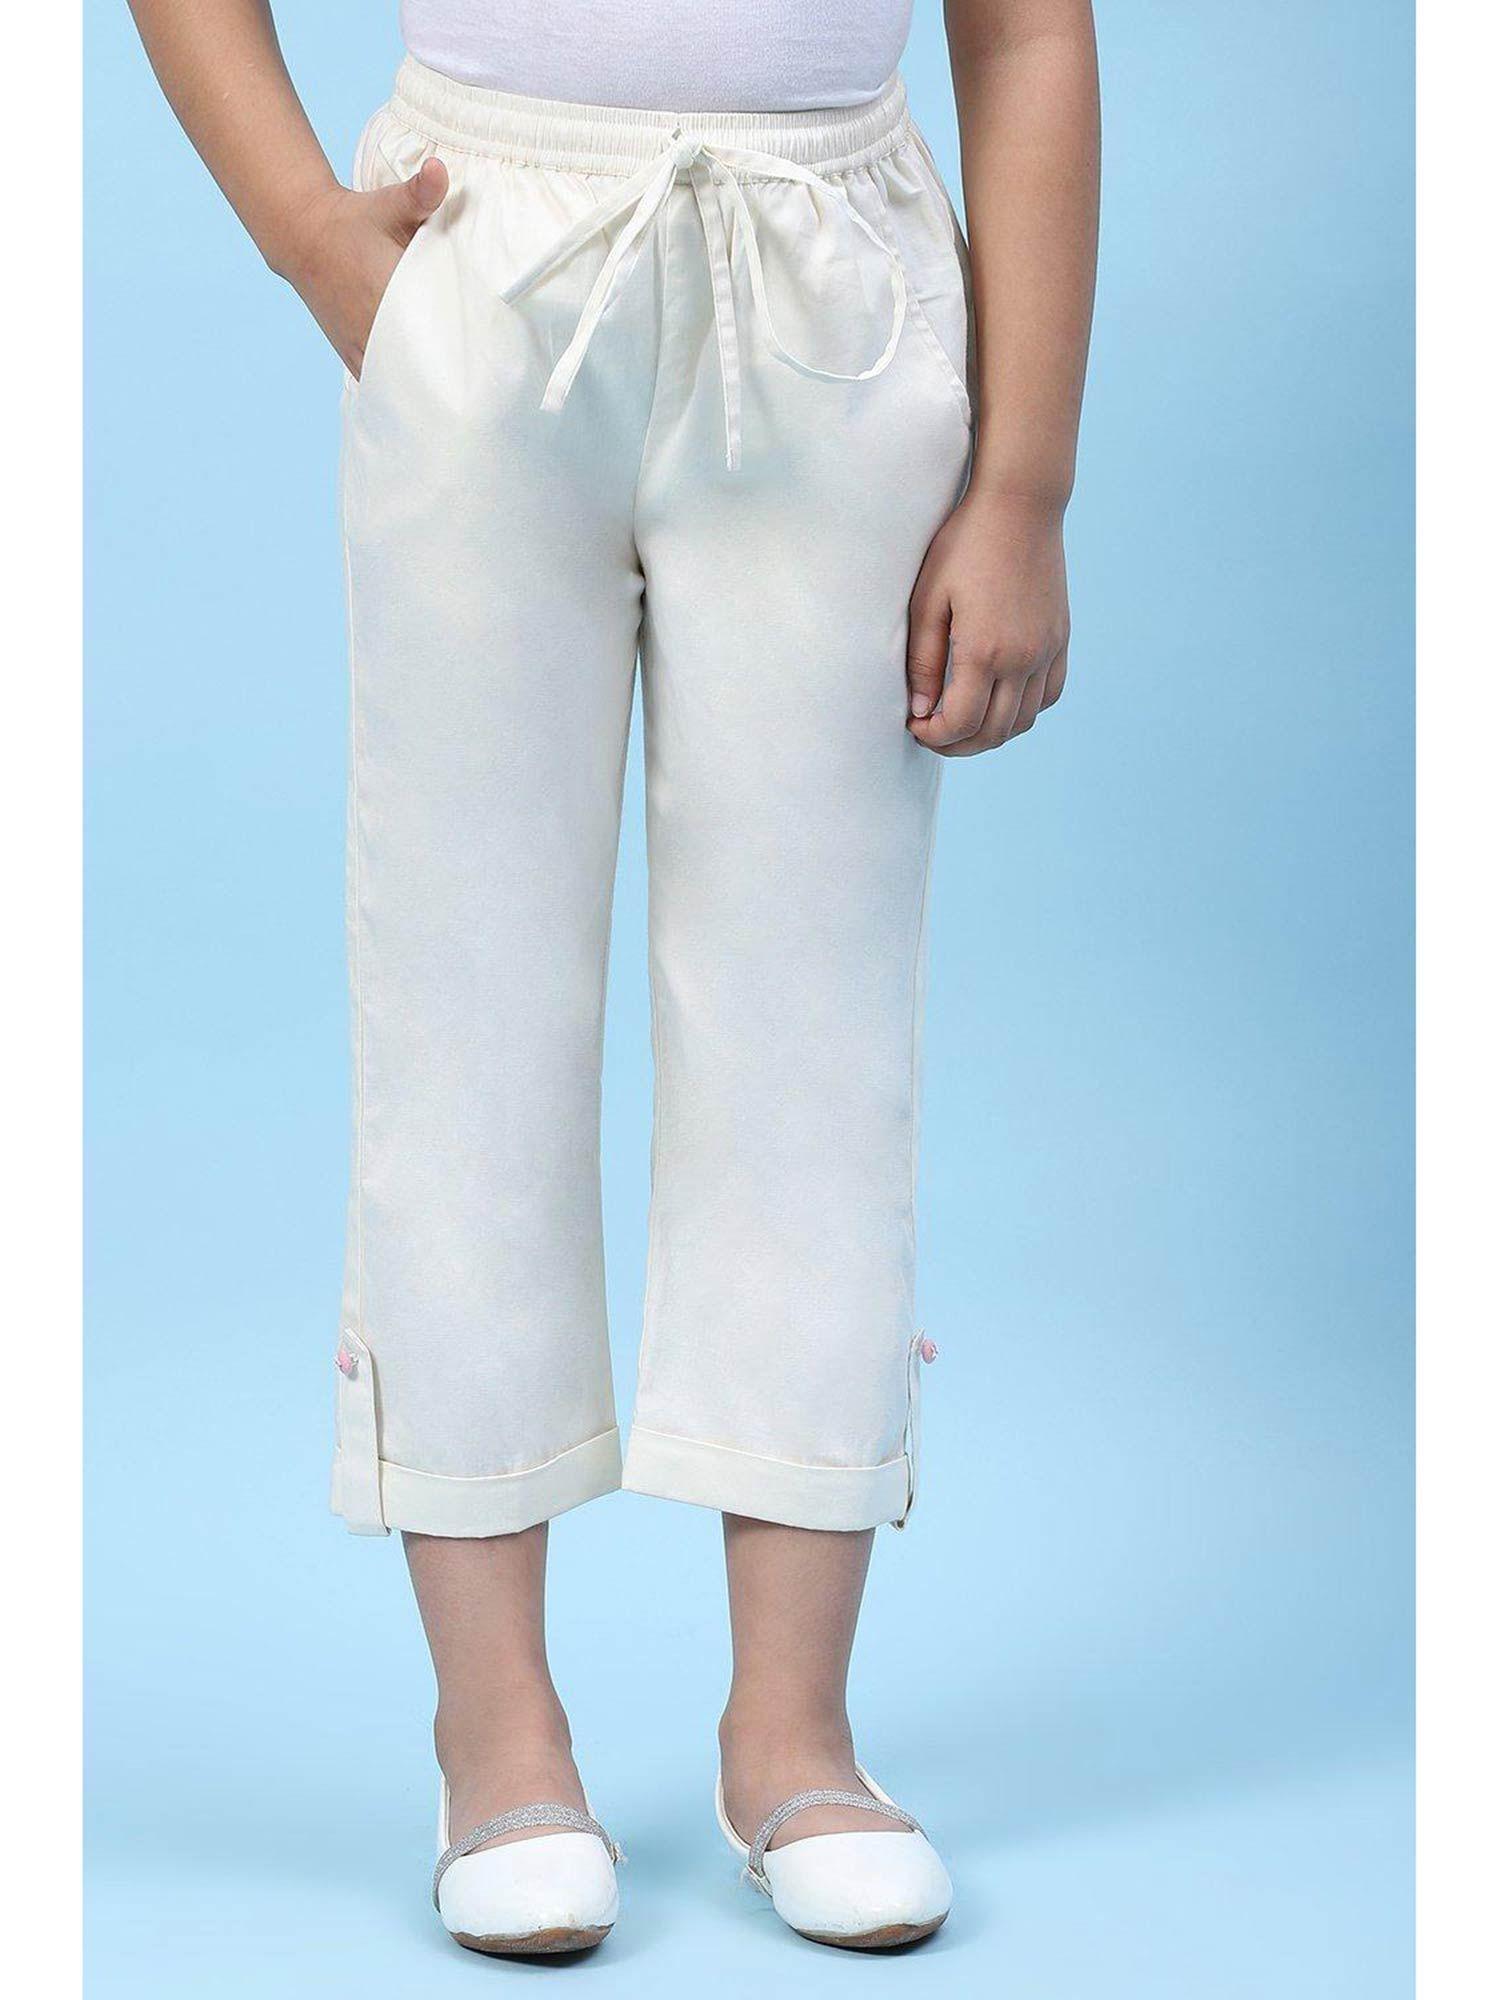 white plain pants